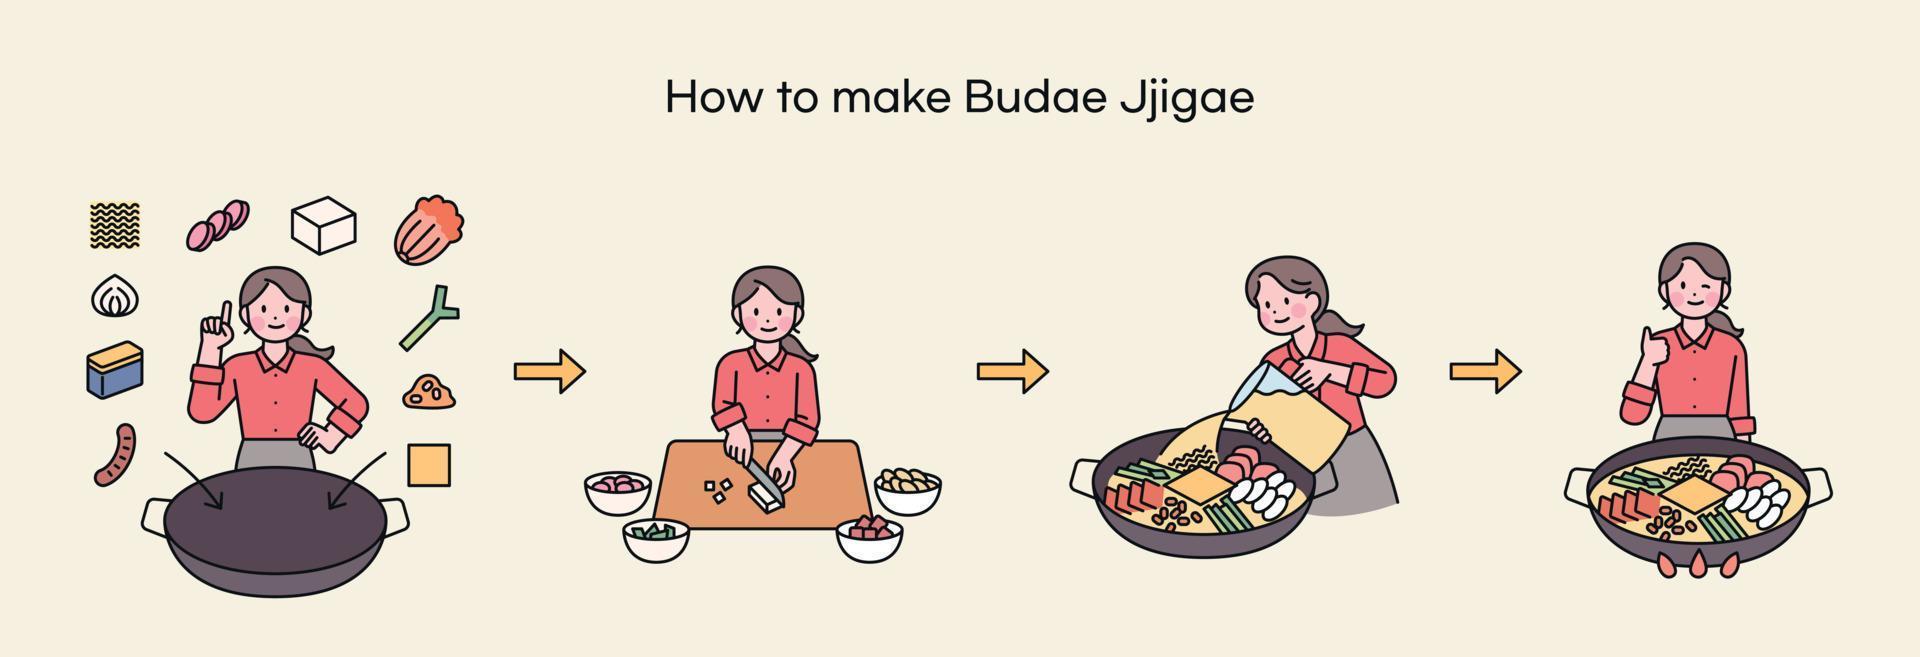 Budae-jjigae, a food steeped in Korean history. A chef explains how to make budae-jjigae. vector